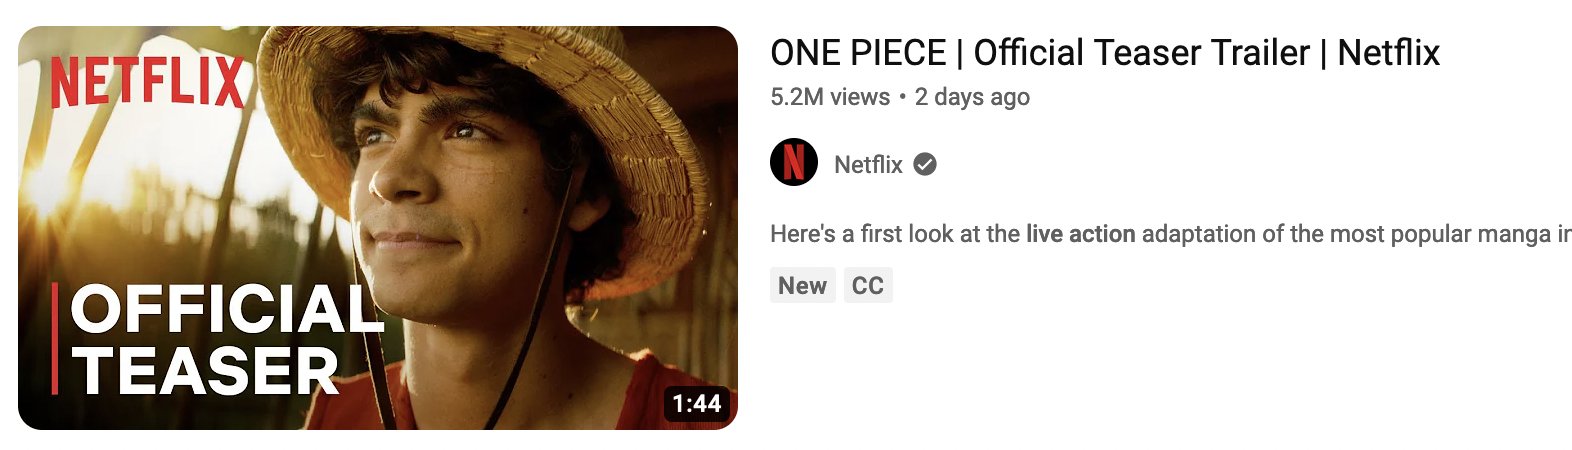 ONE PIECE, Official Teaser Trailer